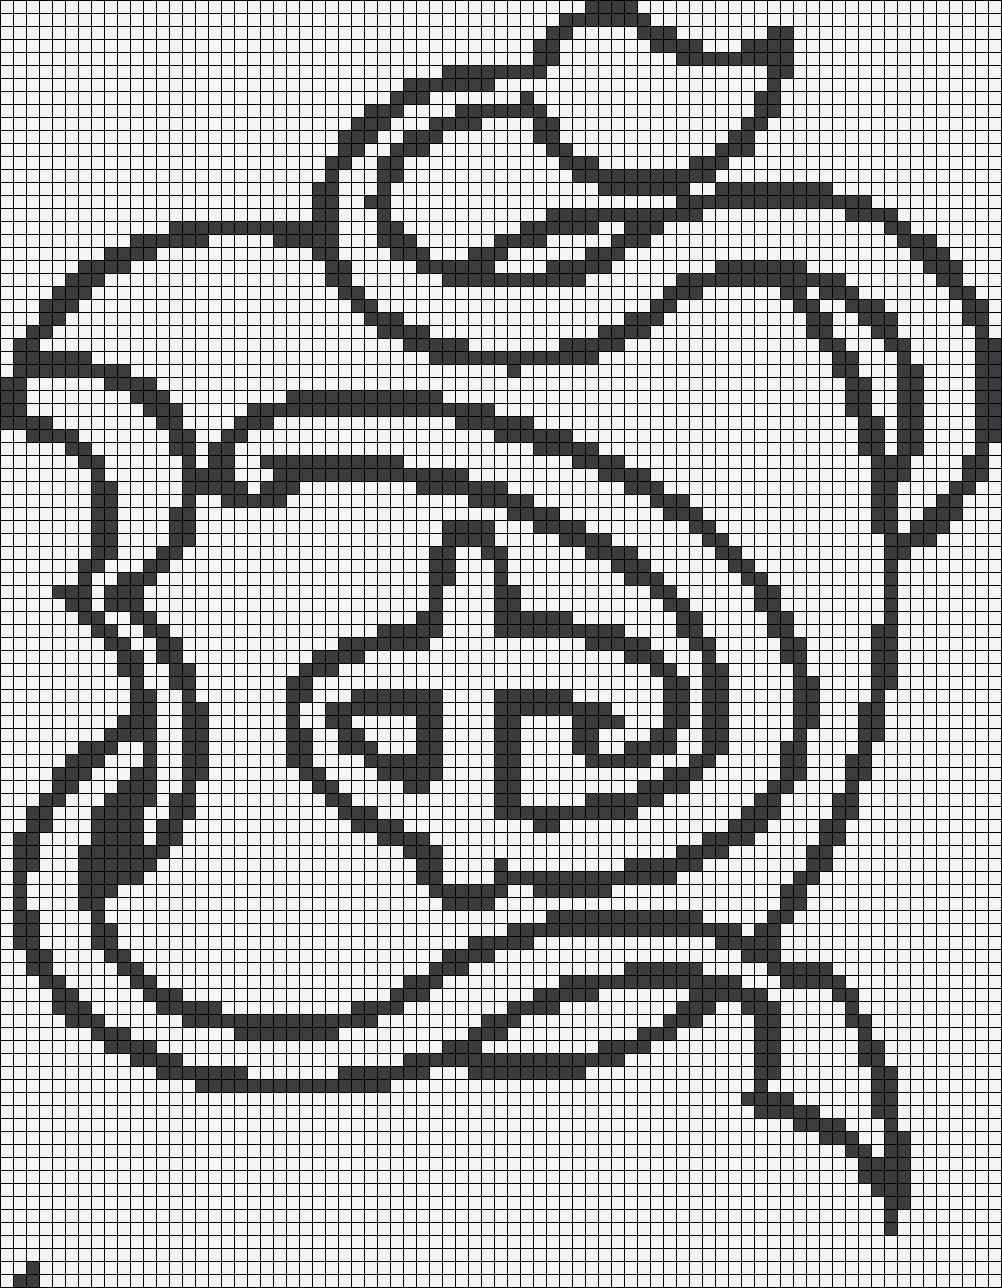 Alpha Friendship Bracelet Pattern 20025 Minecraft Pixel Art Pixel Art Grid Pixel Art Pattern